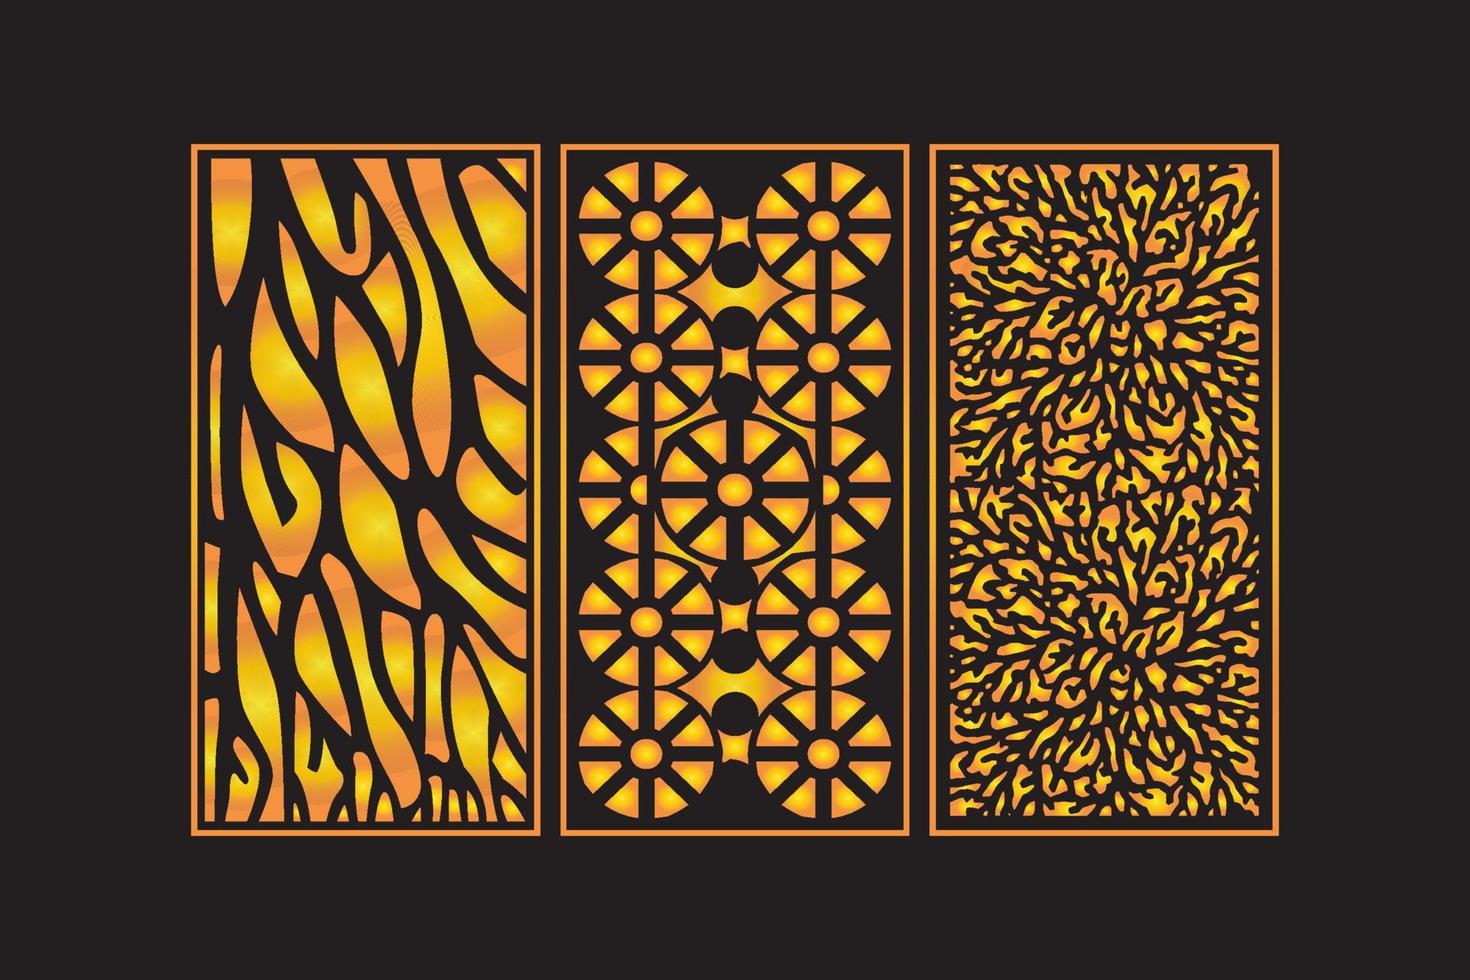 modelo de painéis de corte a laser decorativo islâmico com laser floral geométrico abstrato vetor